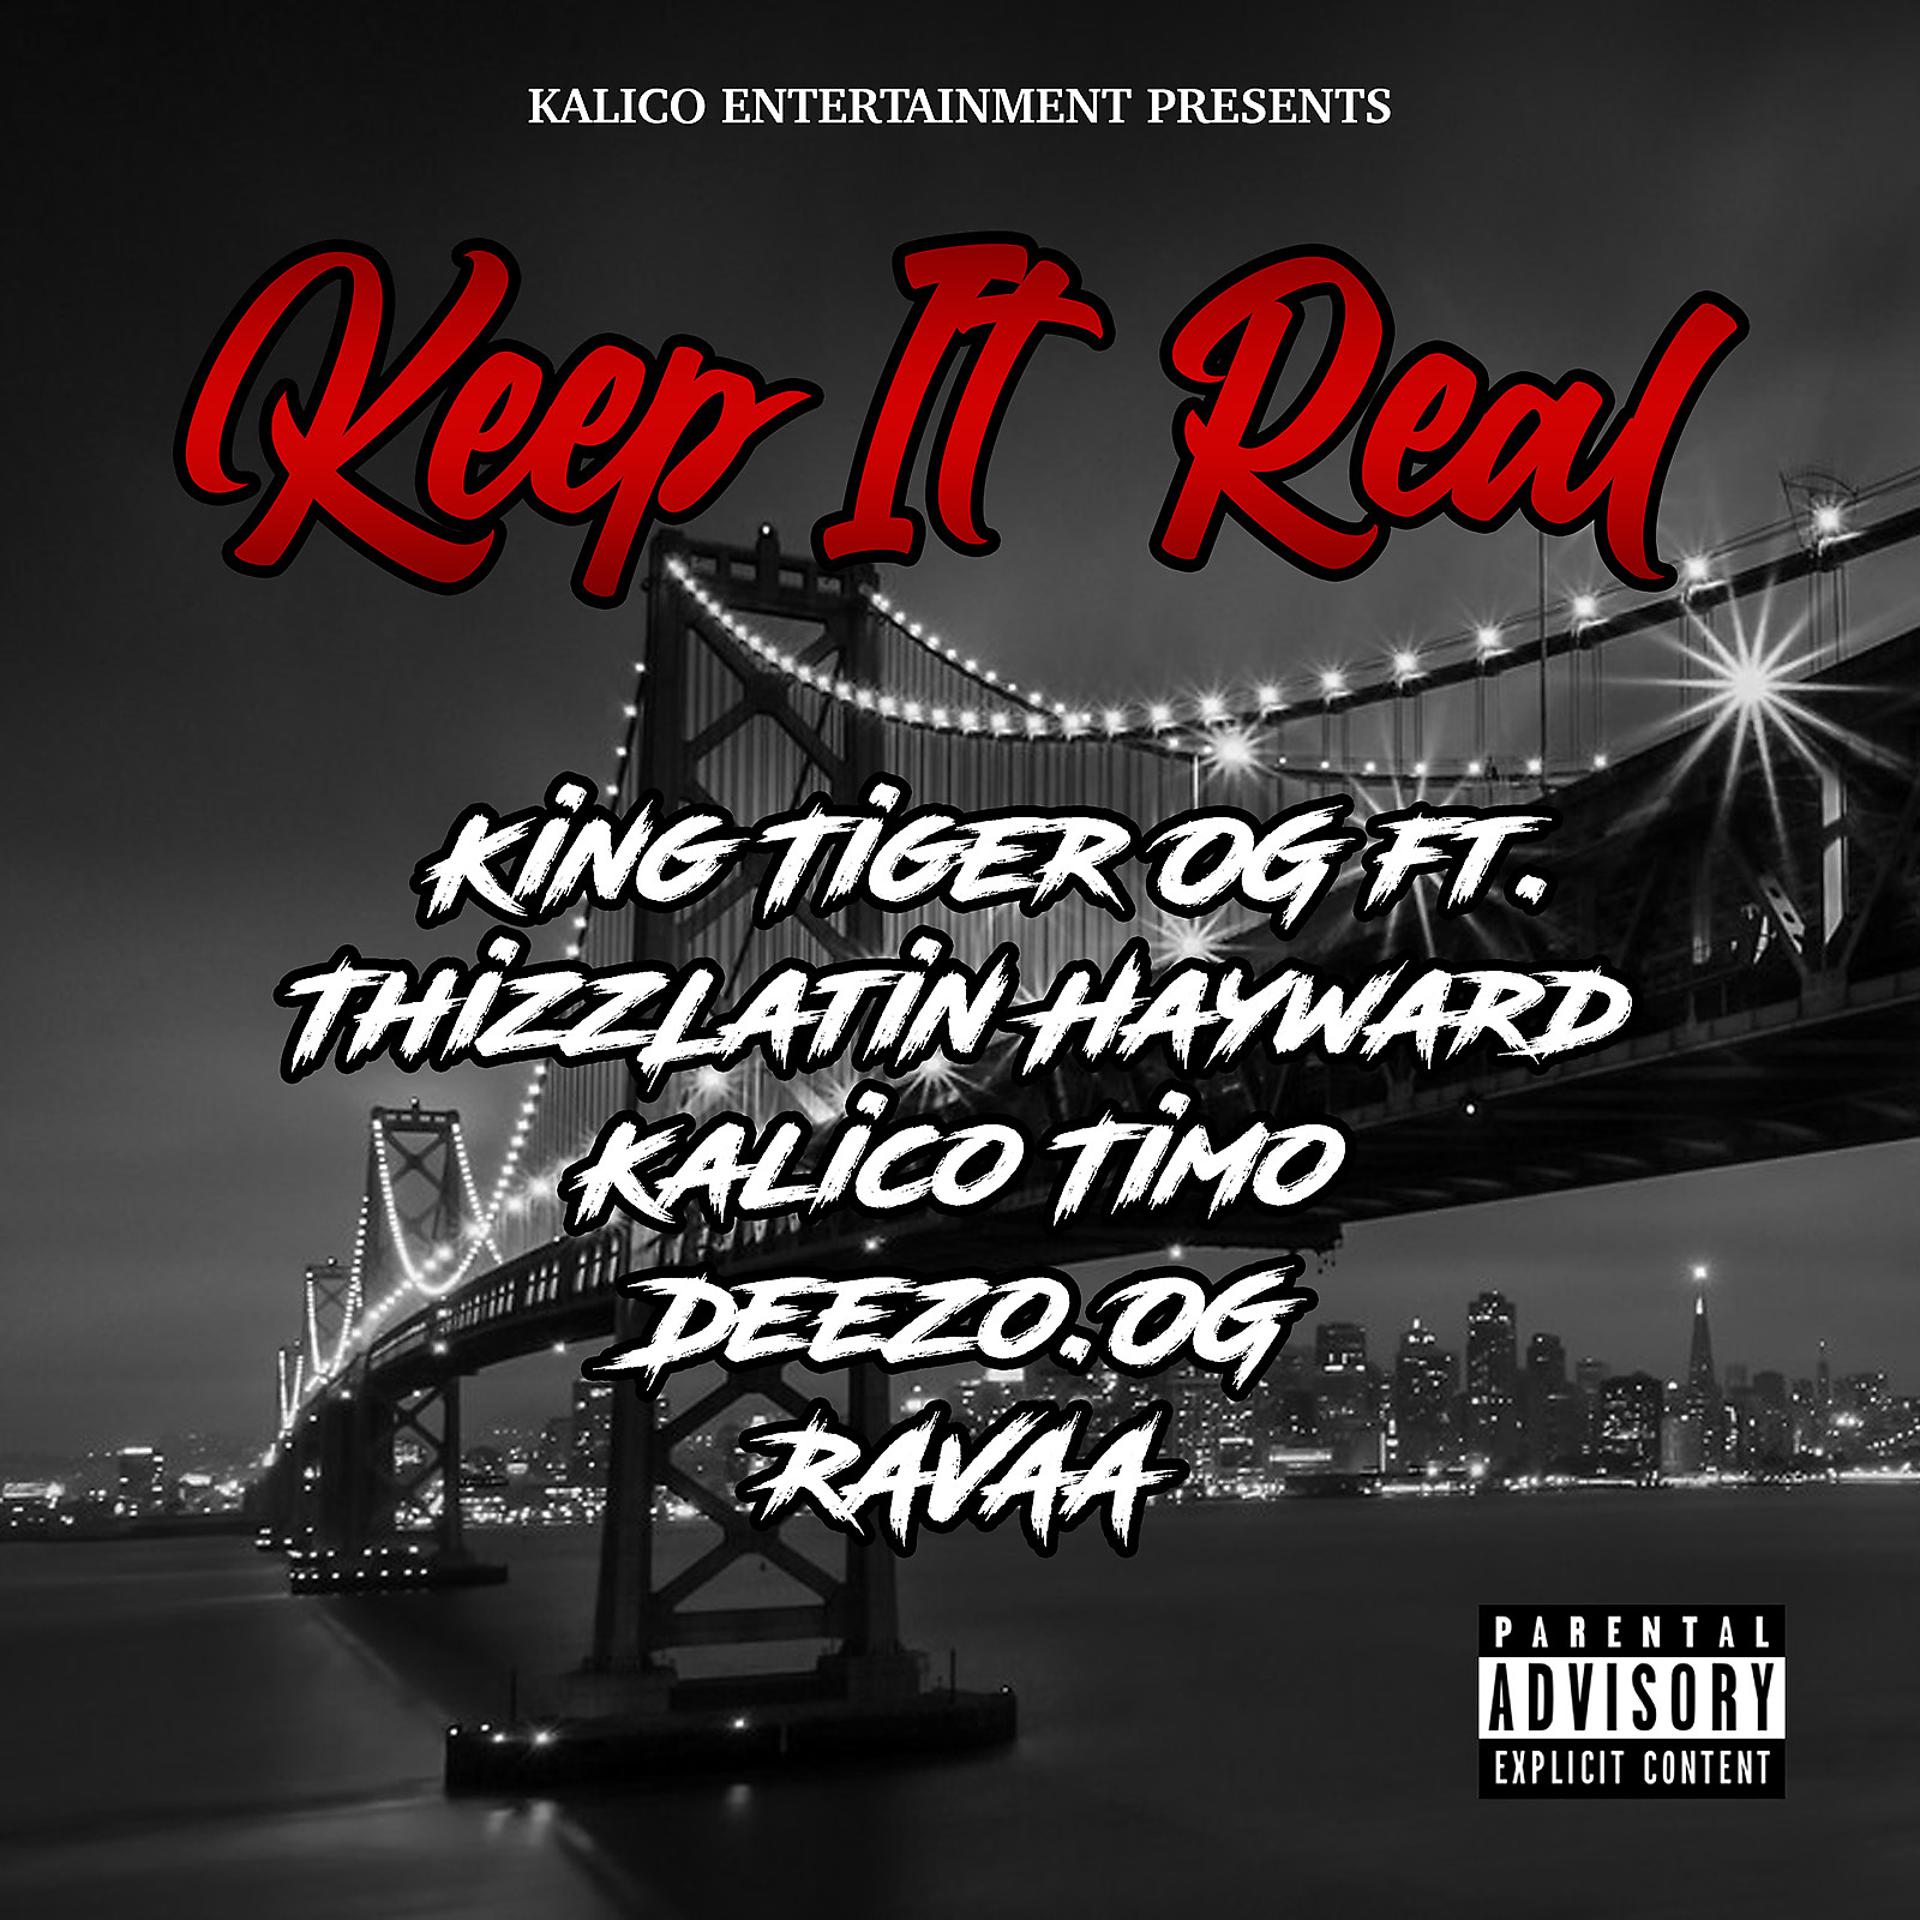 Постер альбома Keep It Real (feat. Thizz Latin Hayward, Kalico Timo, Deezo.OG & Ravaa)